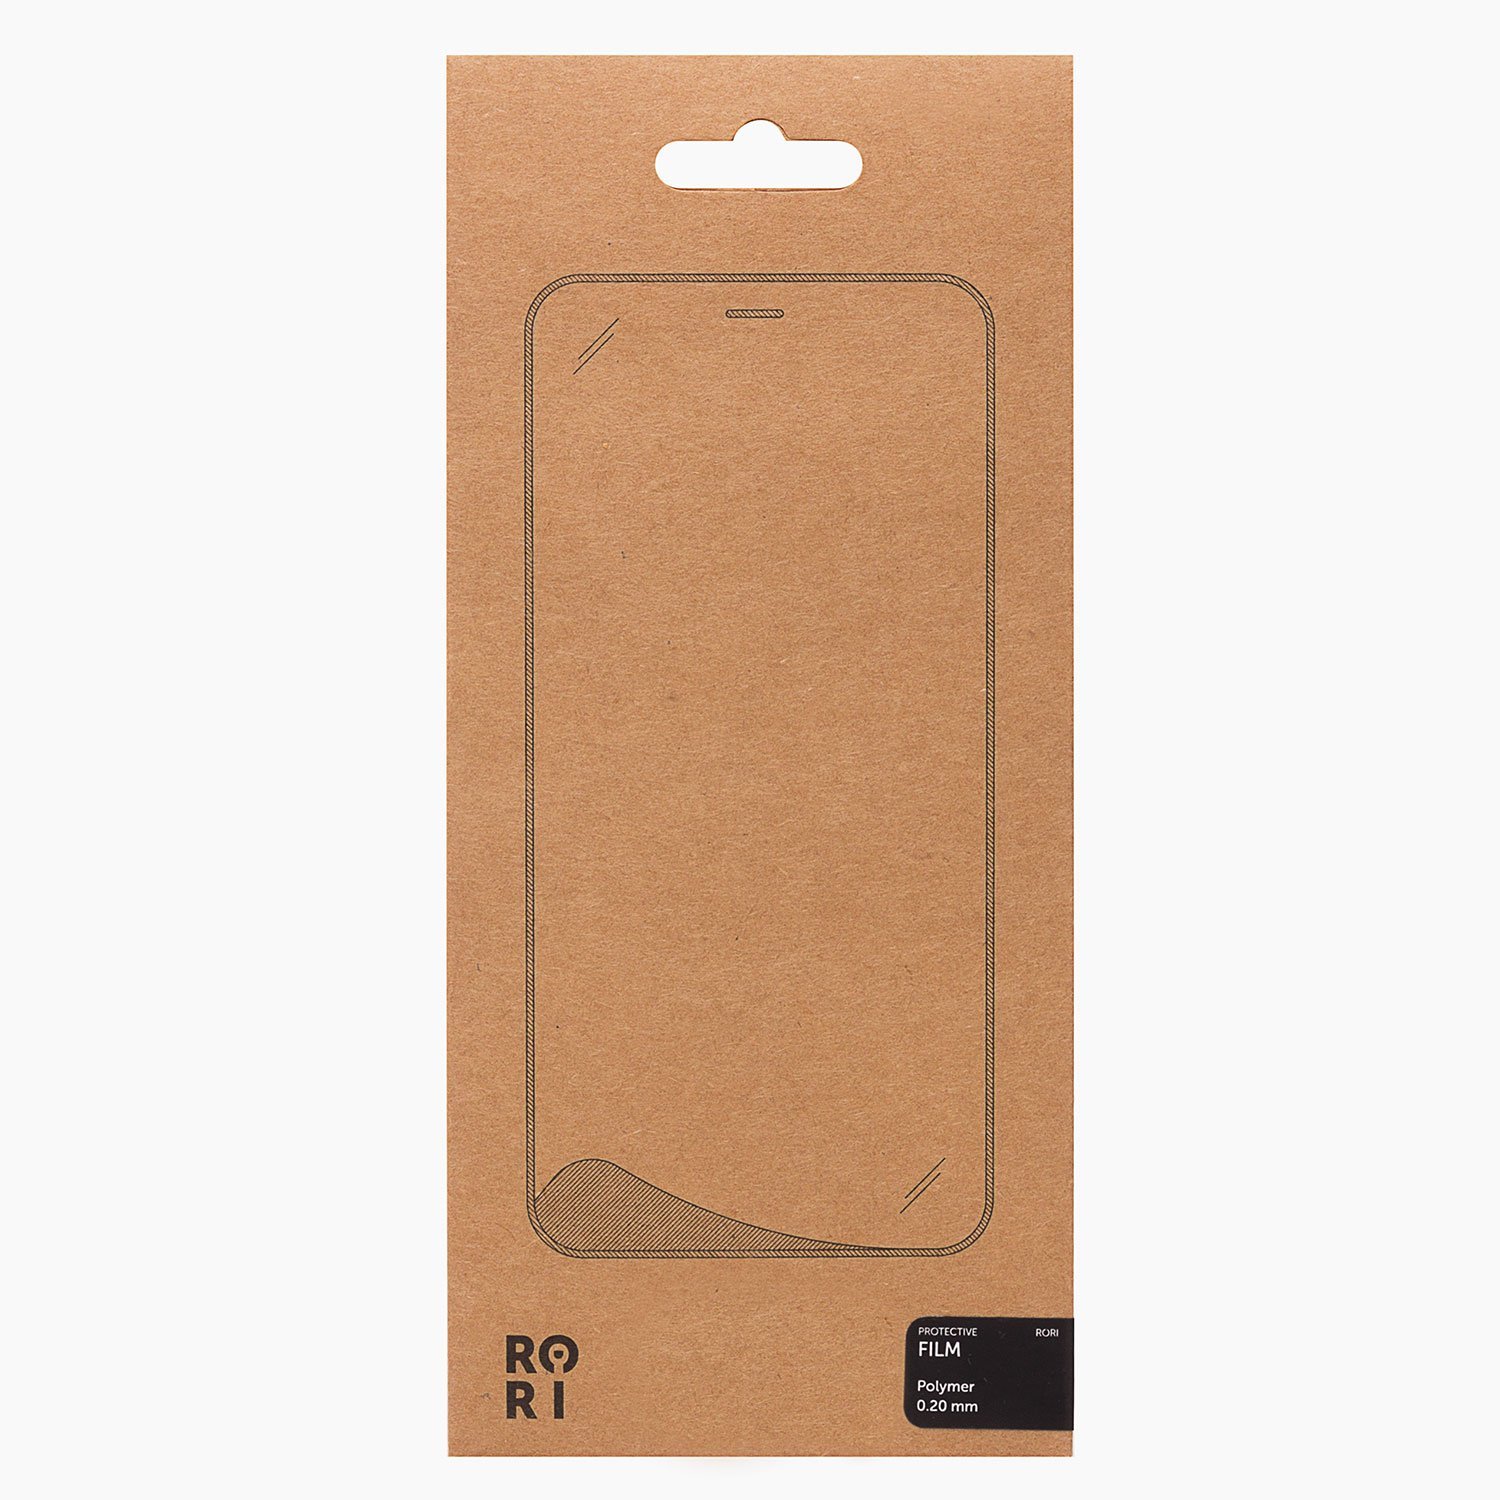 Защитная пленка Rori Polymer для экрана смартфона Samsung SM-G998 Galaxy S21 Ultra, поверхность матовая, черная рамка (125899)